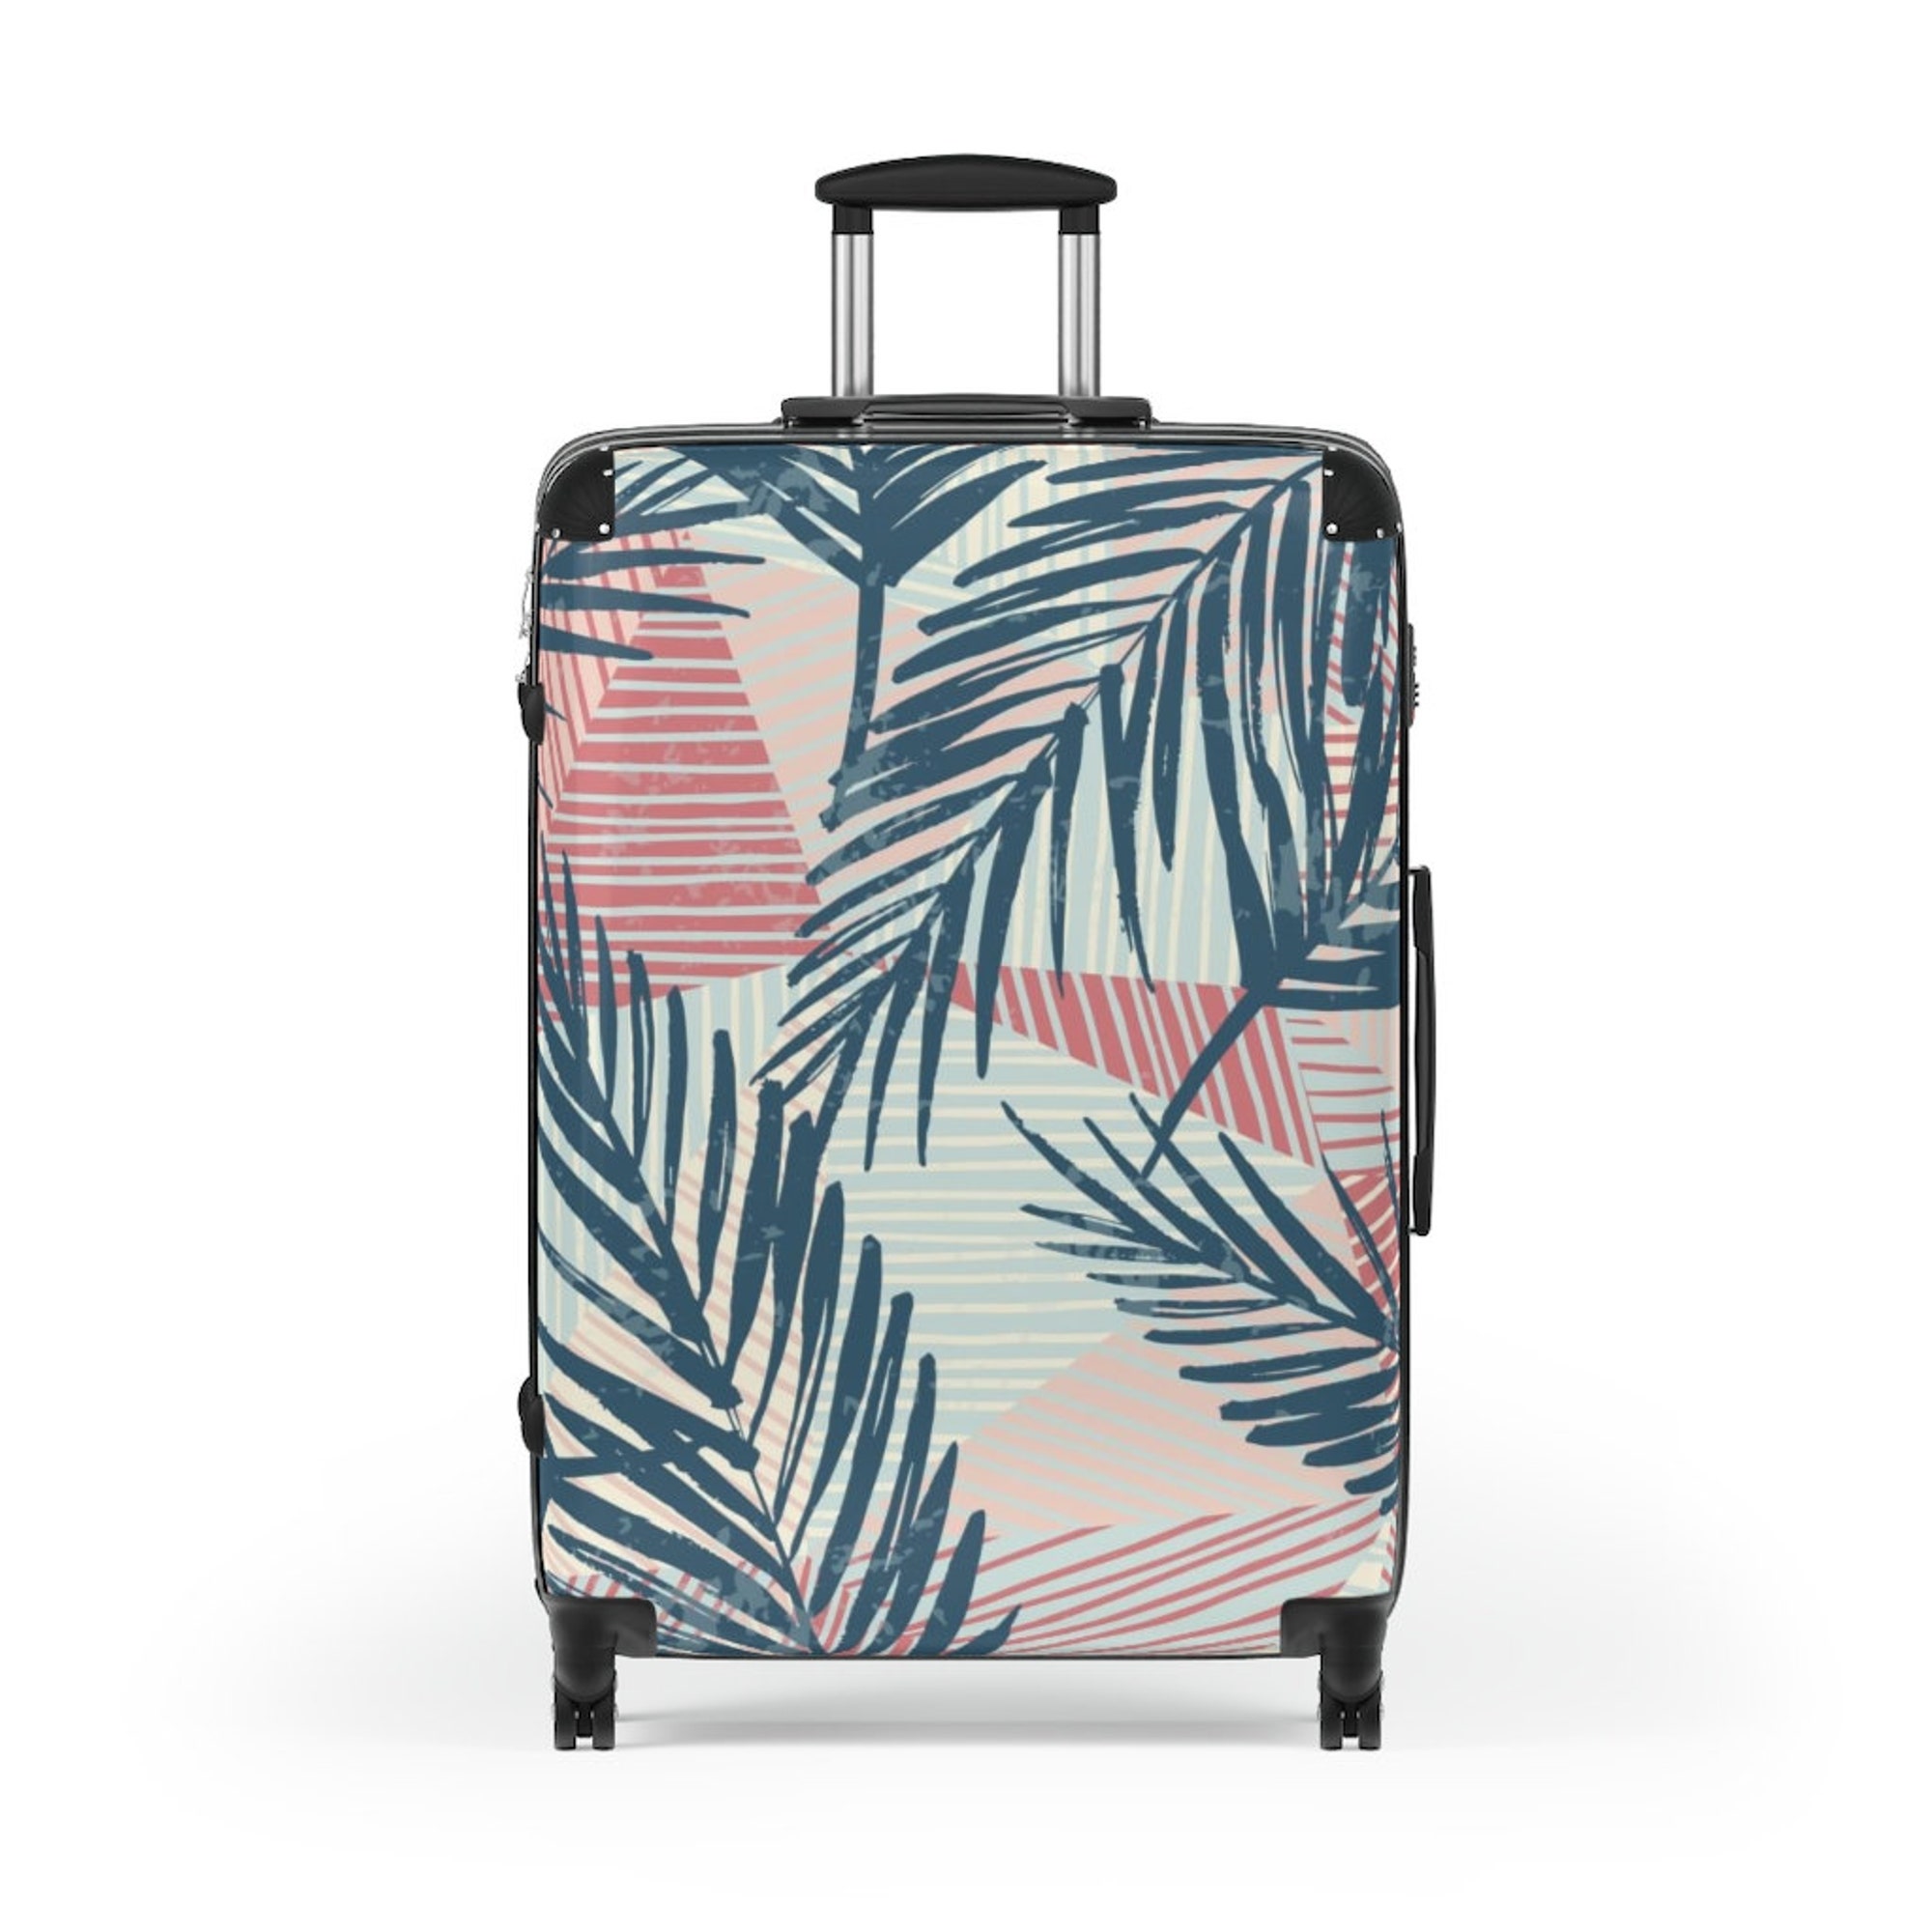 The Bimini Suitcase